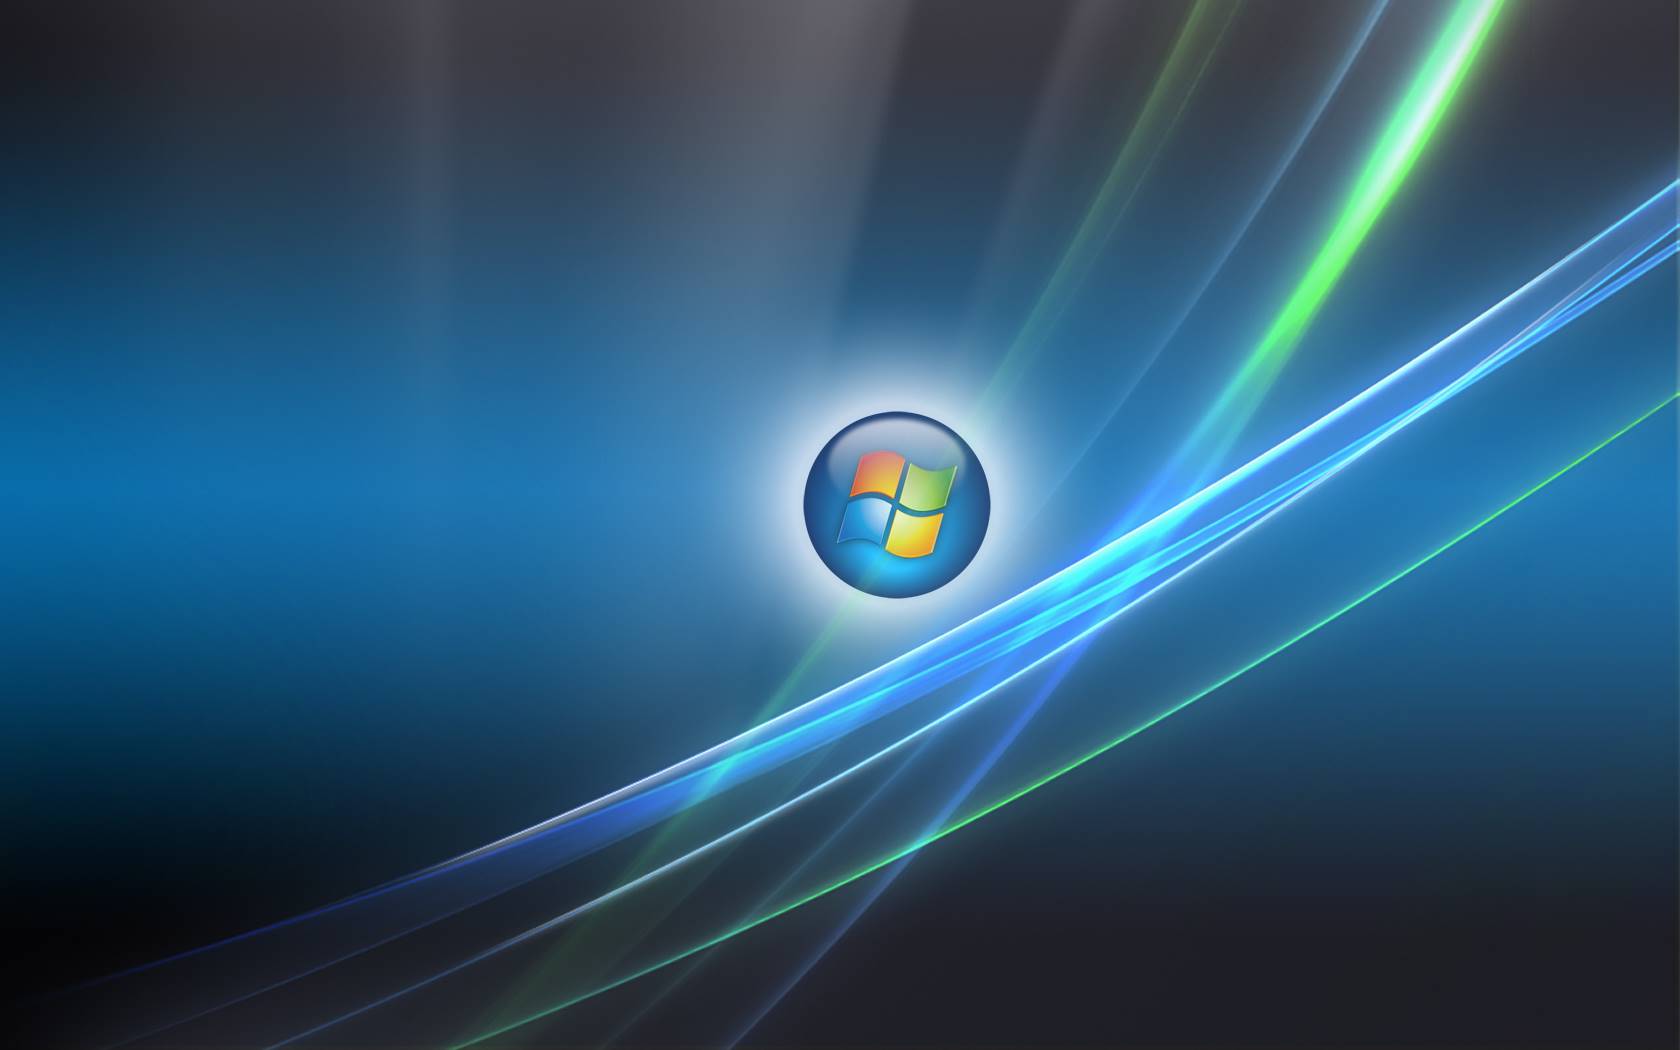 Free Wallpaper Desktop Backgrounds for Windows Vista and XP